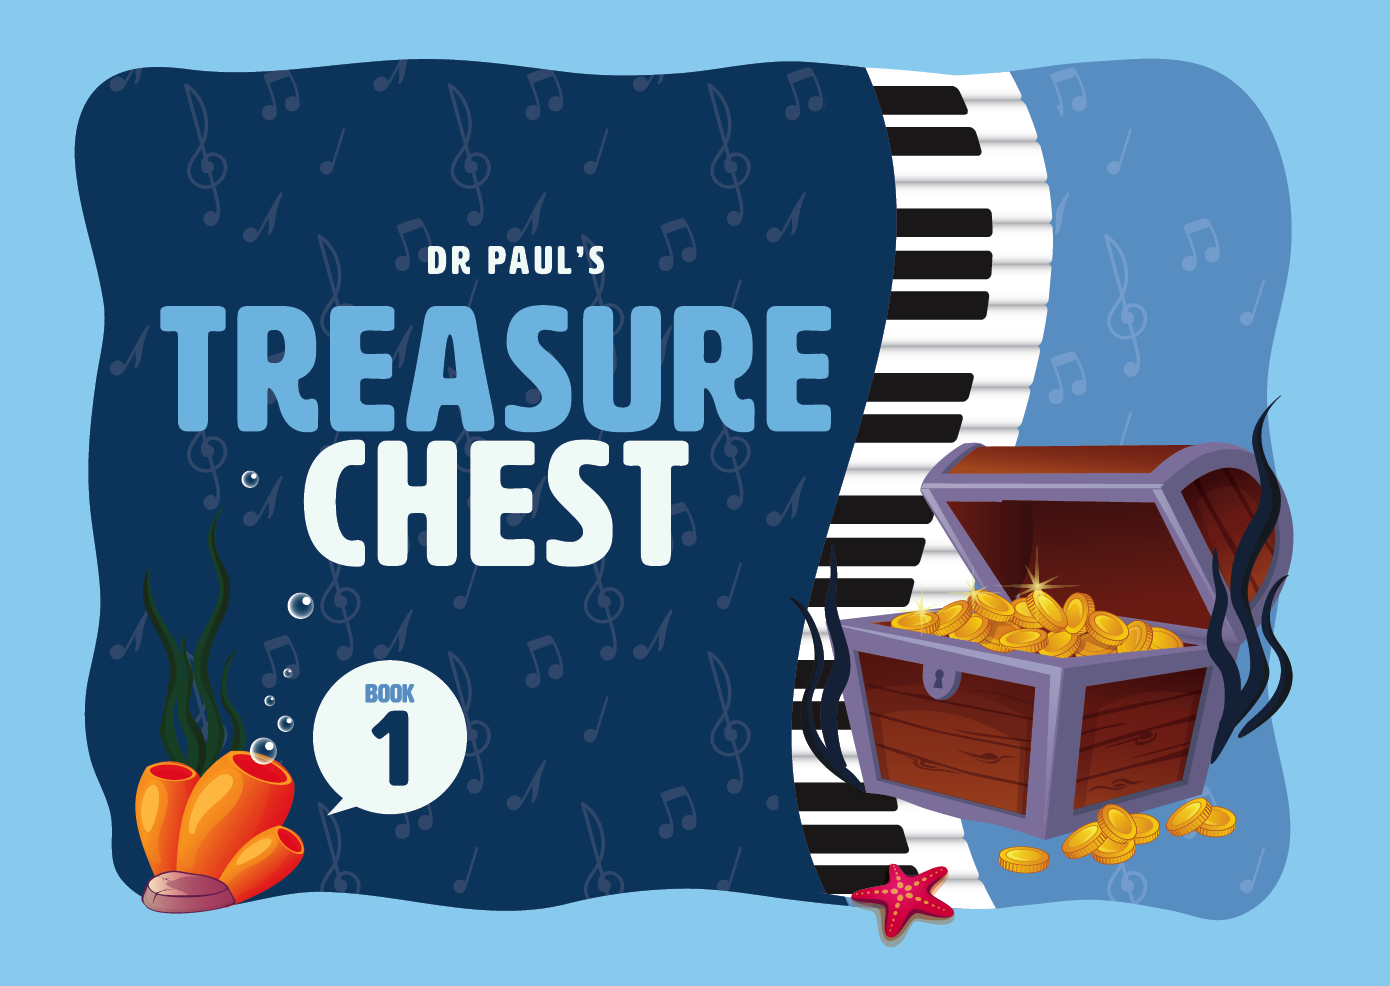 Dr Paul’s Treasure Chest